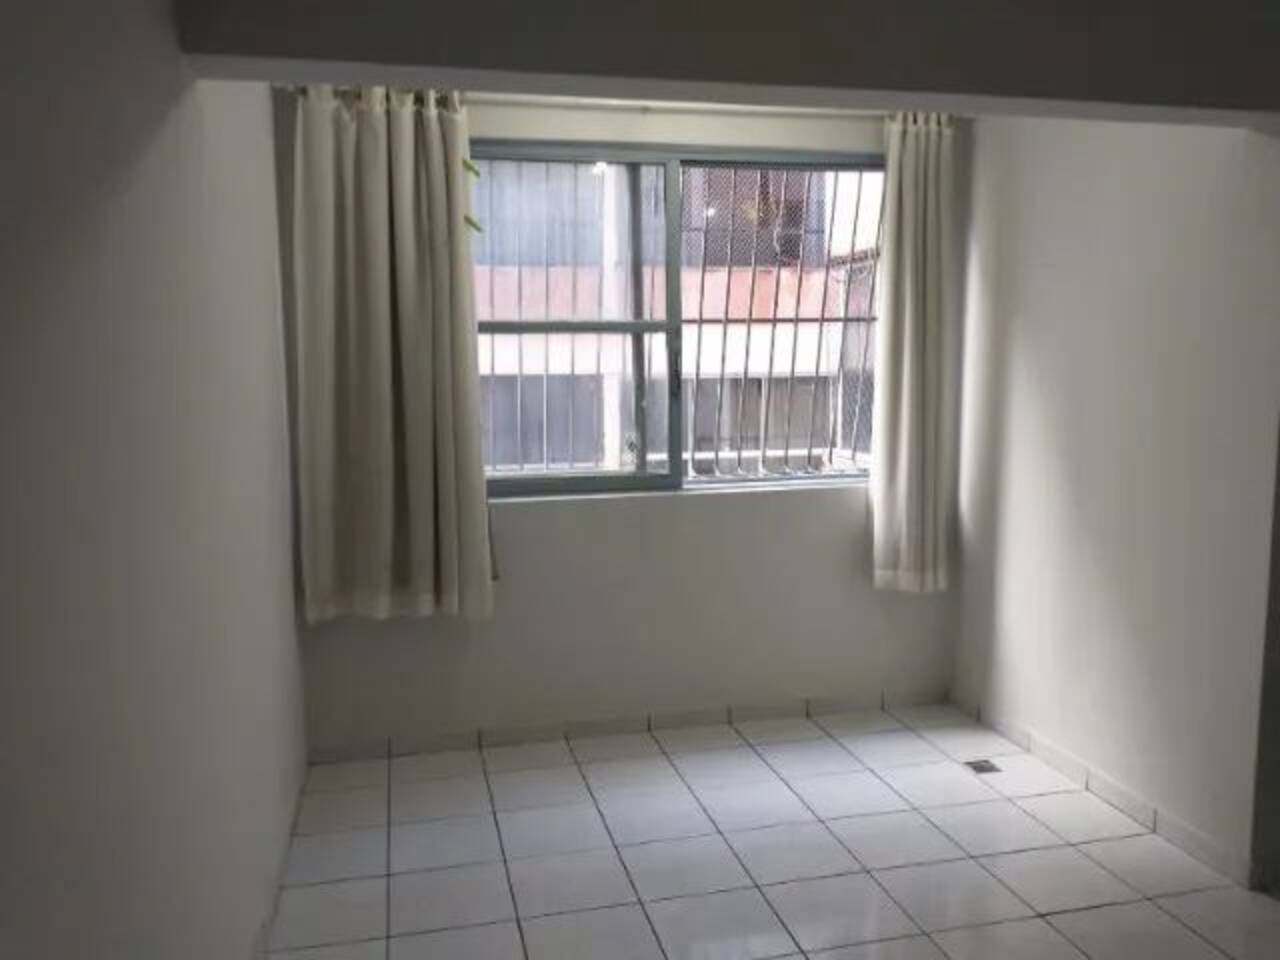 Apartamento Taguatinga Sul, Brasília - DF